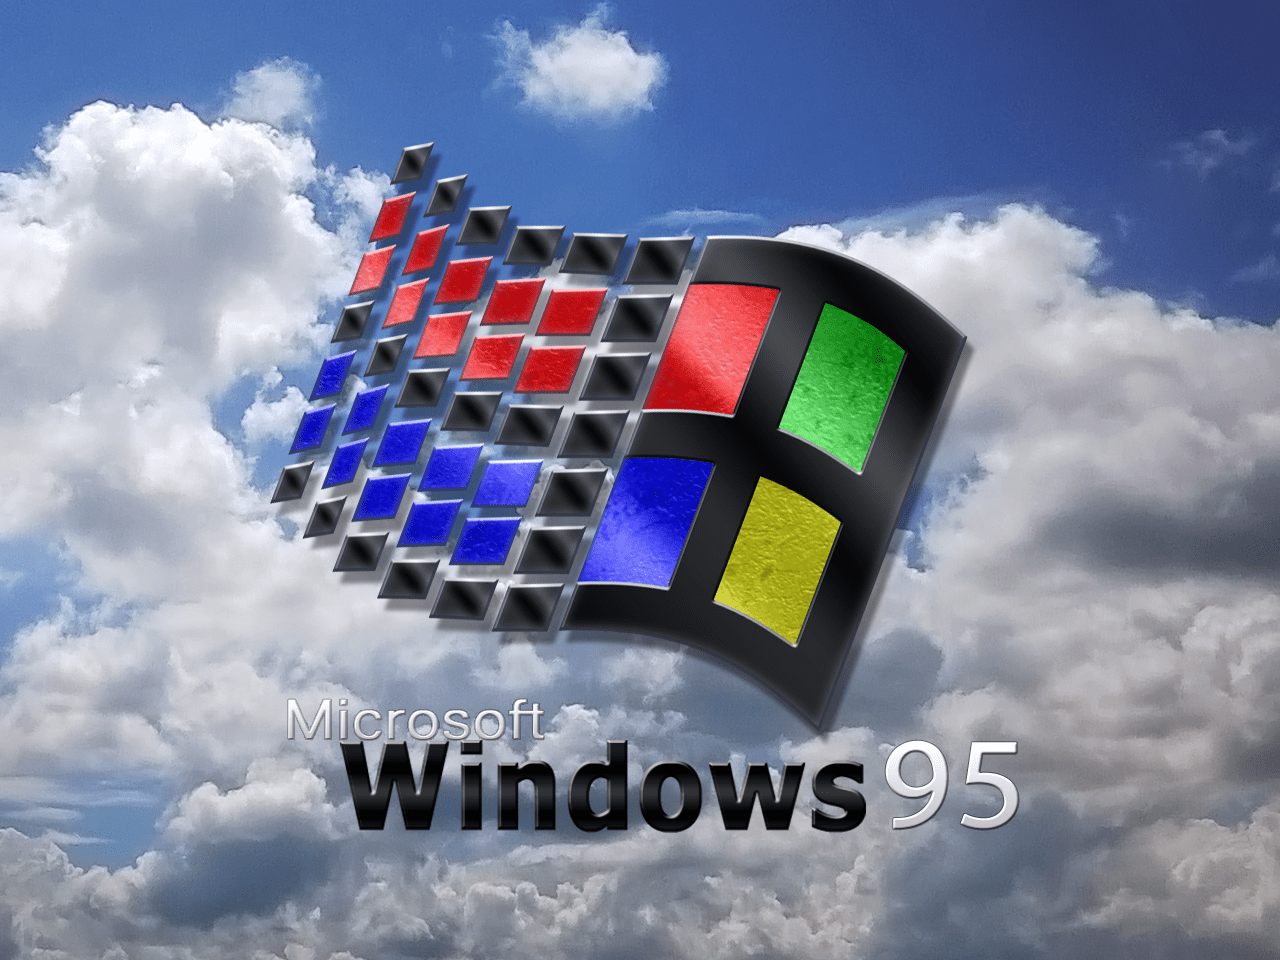 Windows 95 logo with the word Microsoft below it - Windows 95